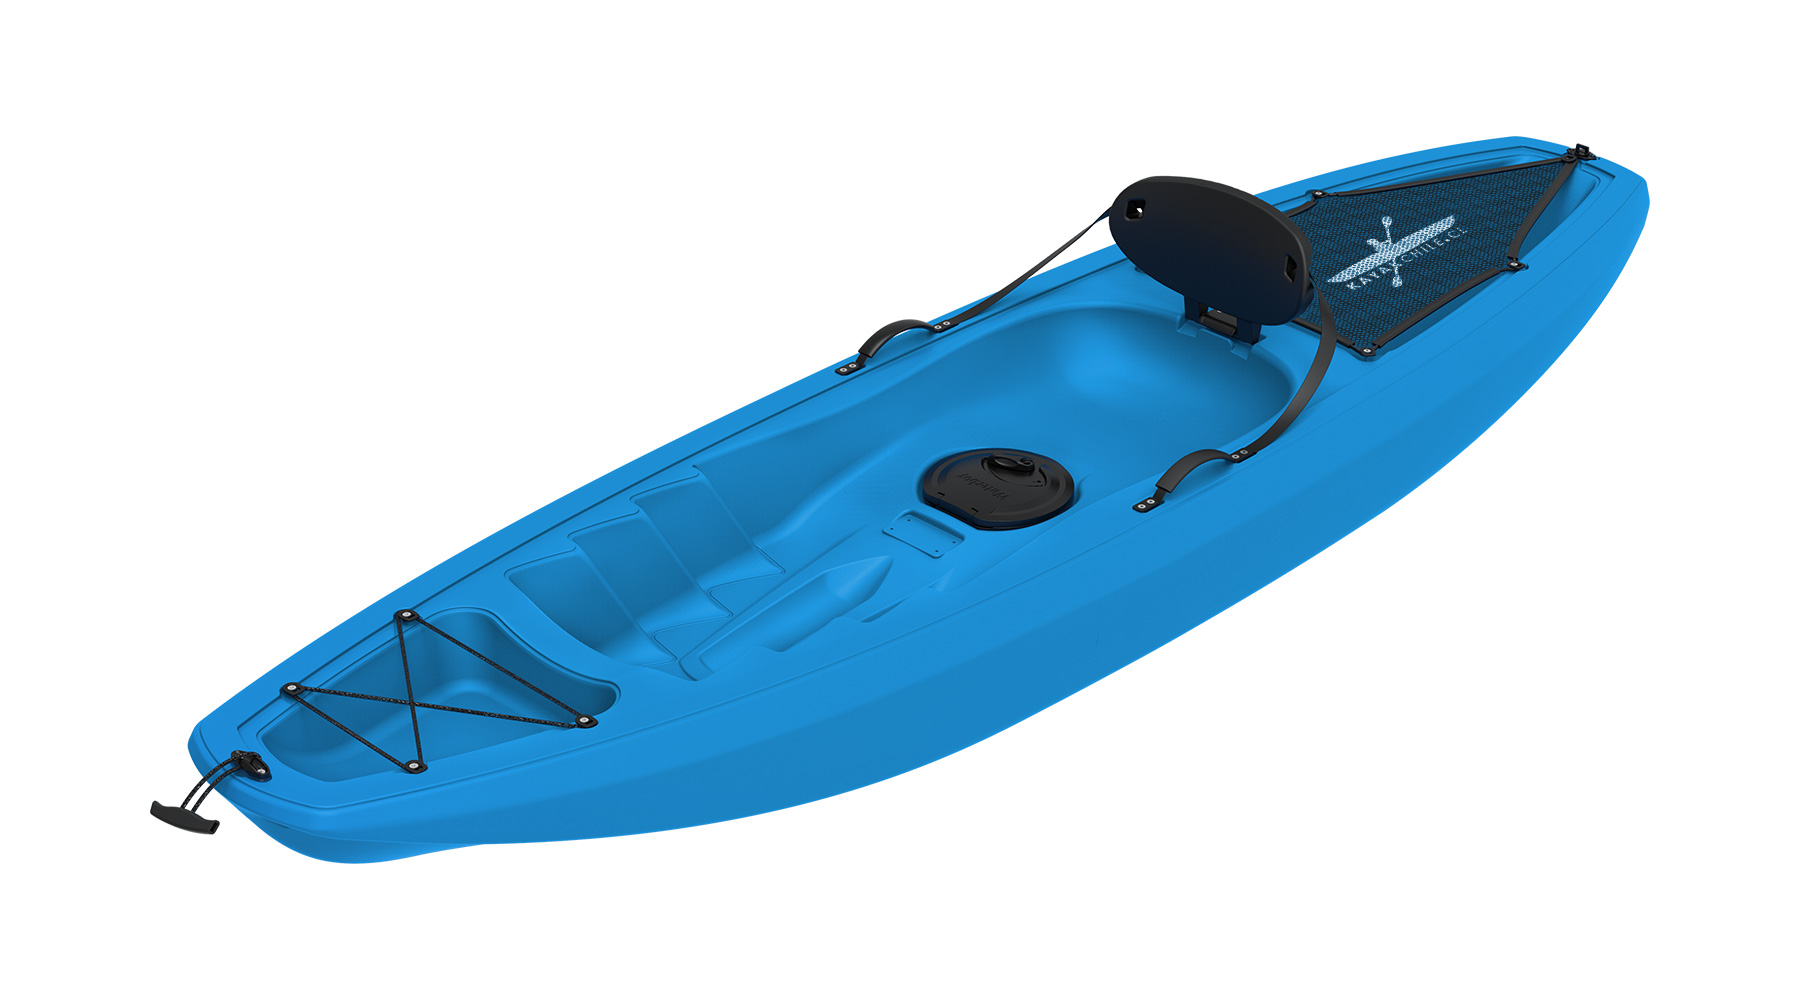 Kayak Single Azul Modelo Pucon